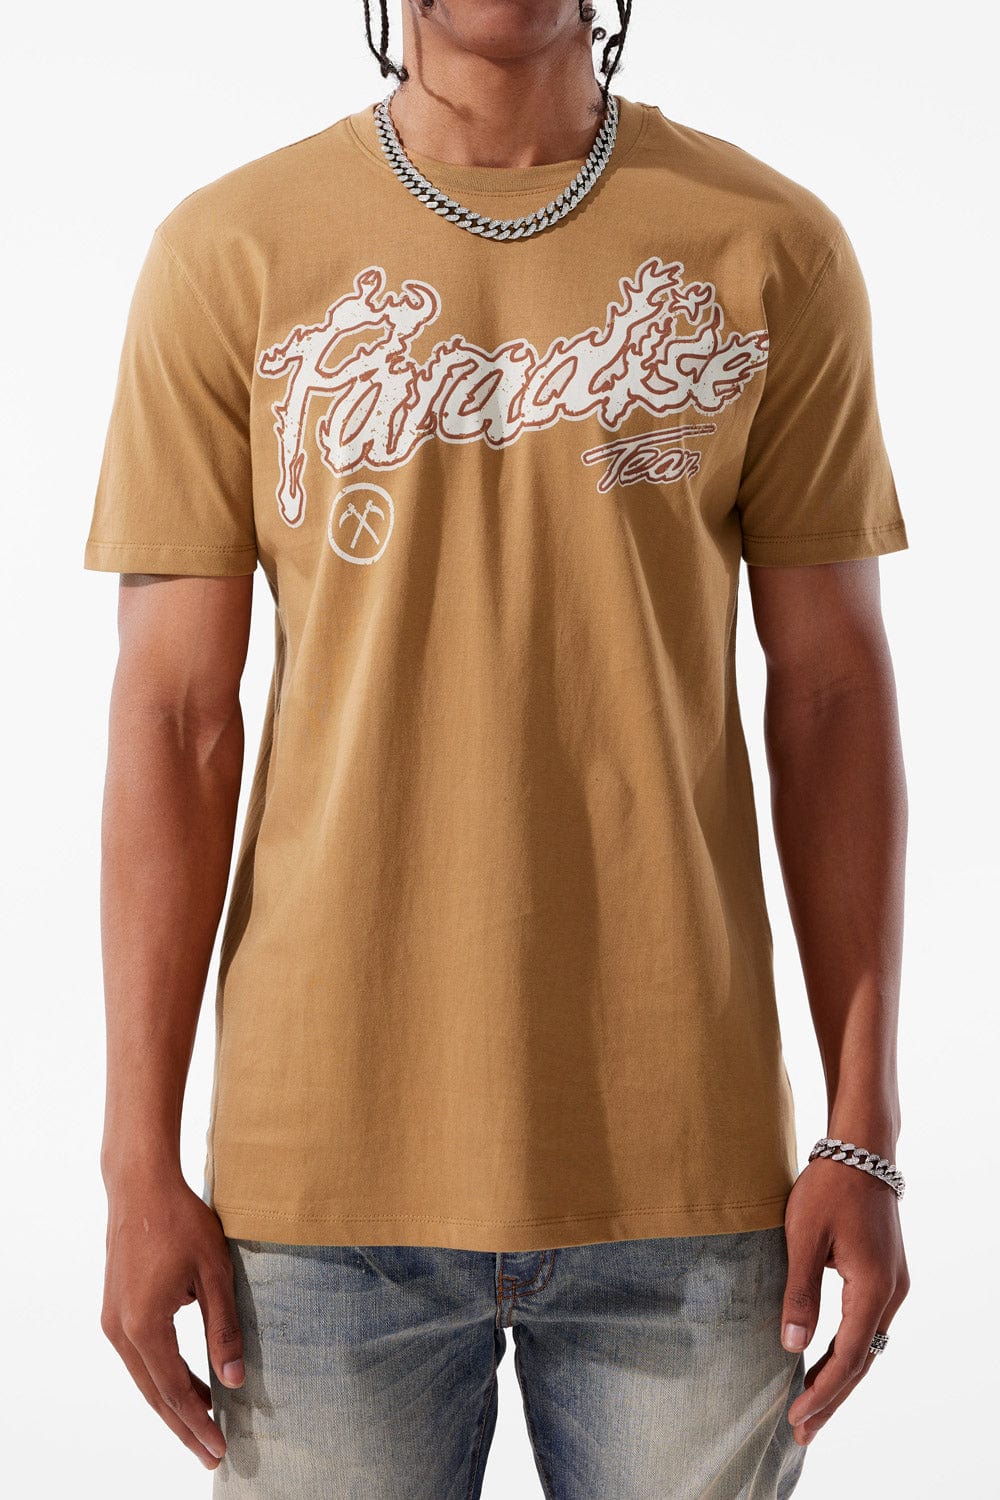 Jordan Craig Paradise Tour T-Shirt (Mocha) S / Mocha